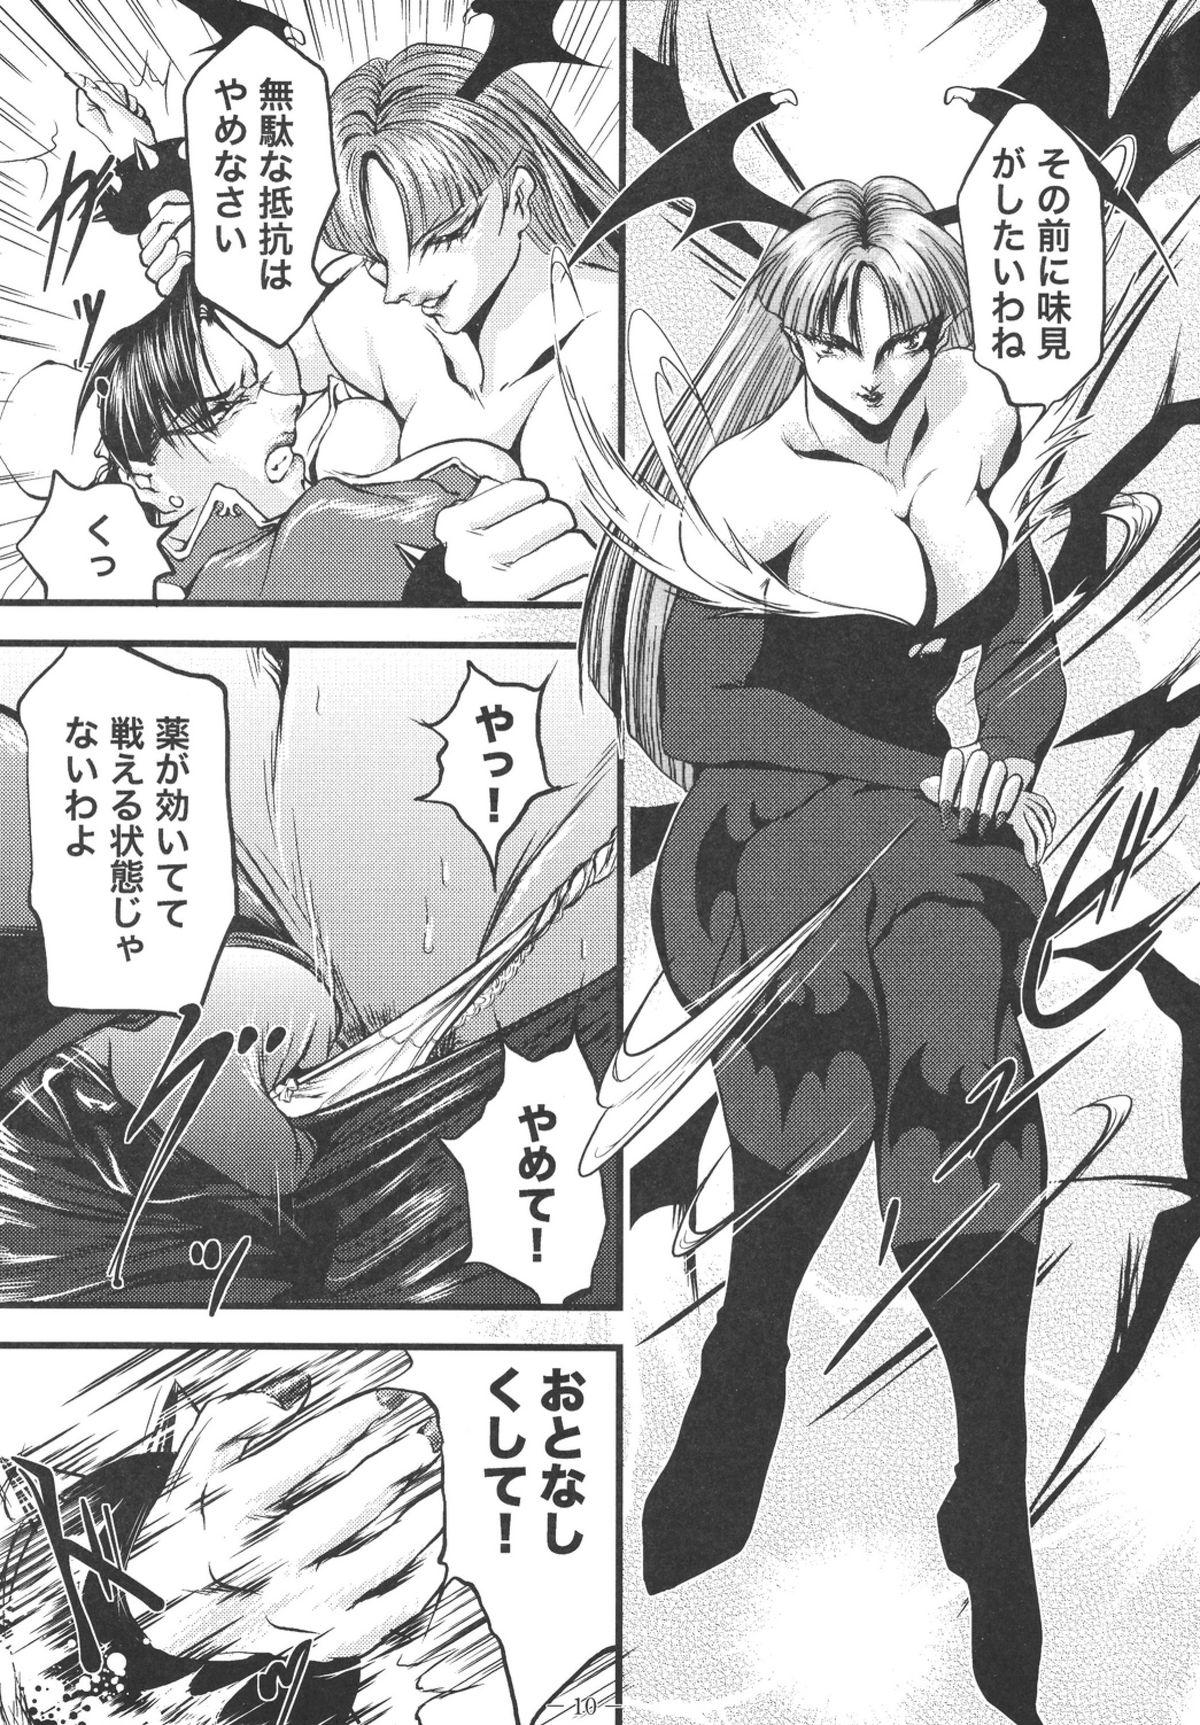 Glasses Ingoku no Ikusa Megami Battle Queen - Street fighter Darkstalkers Abg - Page 10